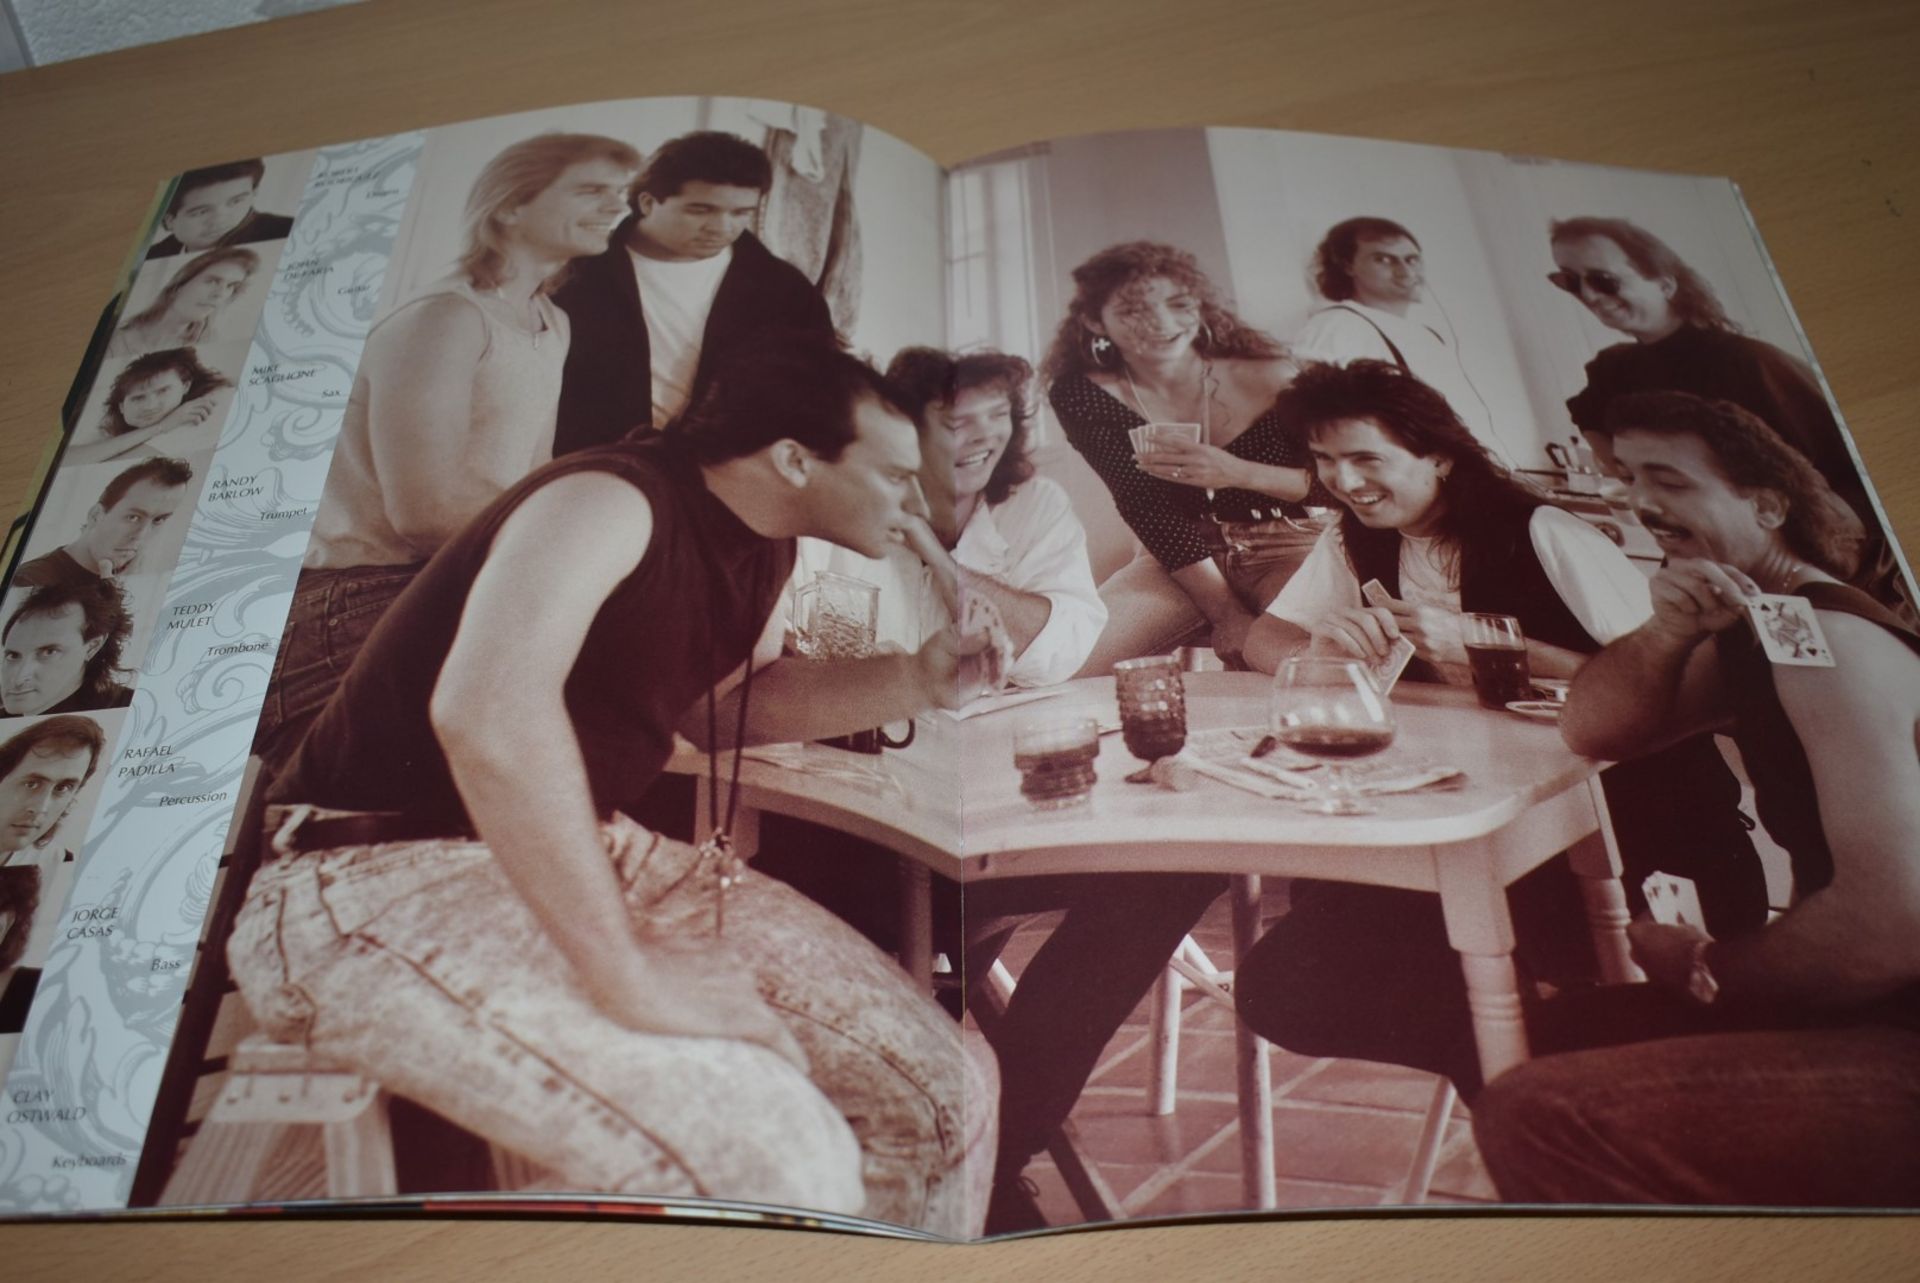 1 x Gloria Estefan Miami Sound Machine Get On Your Feet 1989-90 Tour Programme Book - Ref MB136 - - Image 3 of 3